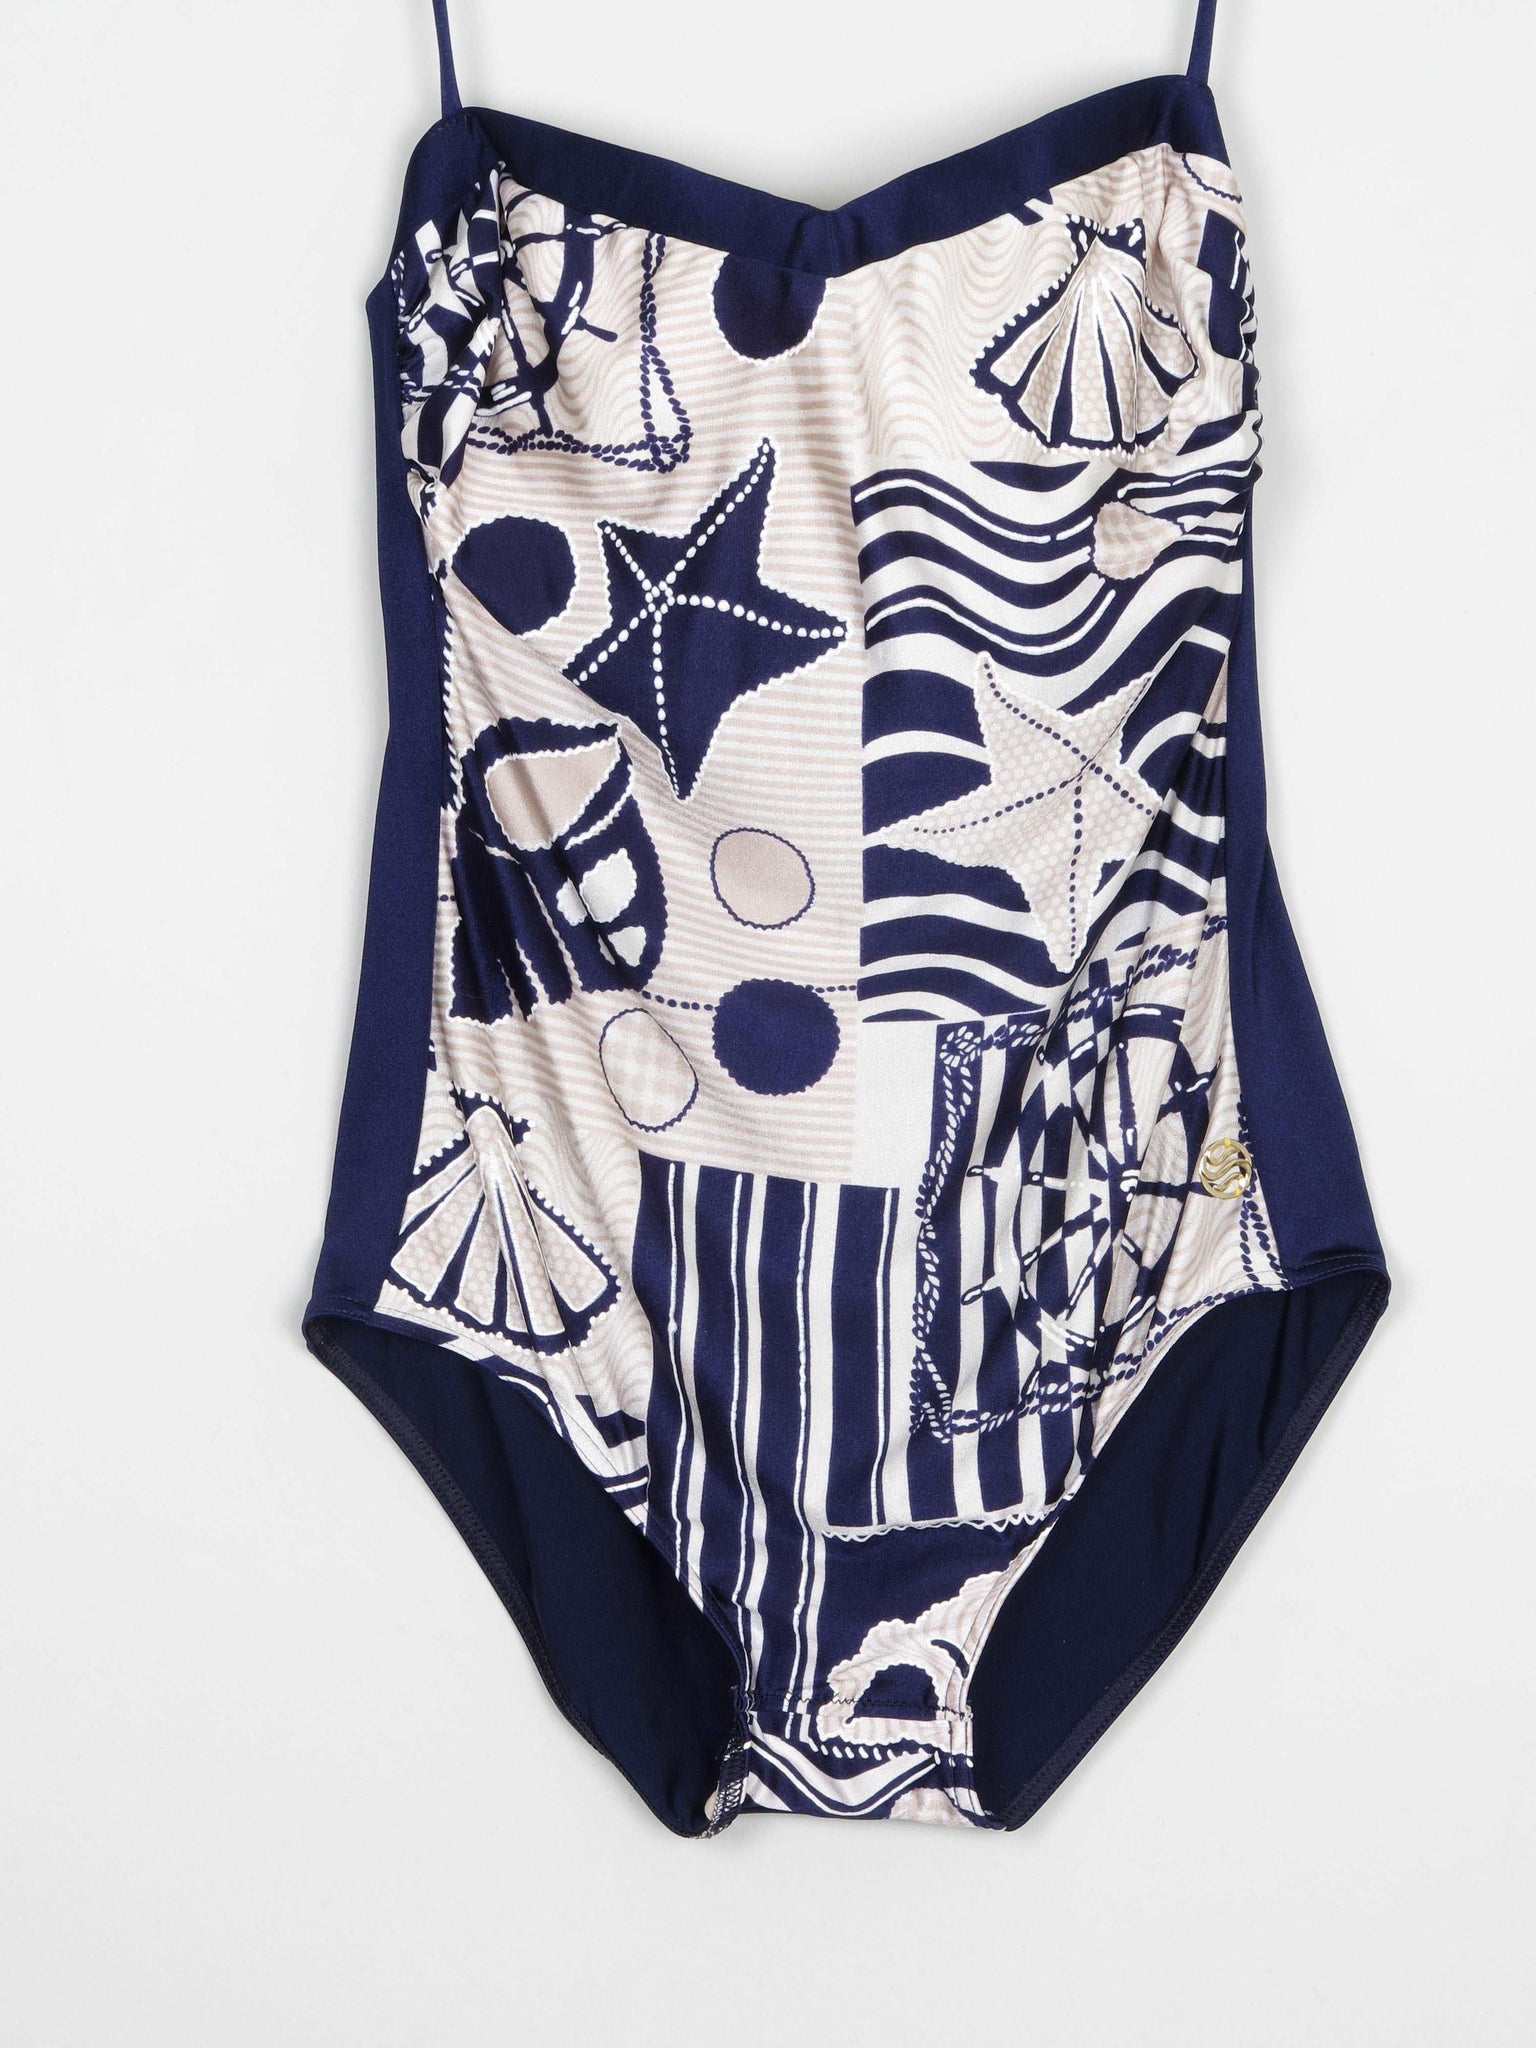 Beach Print Navy Vintage Swimsuit M - The Harlequin